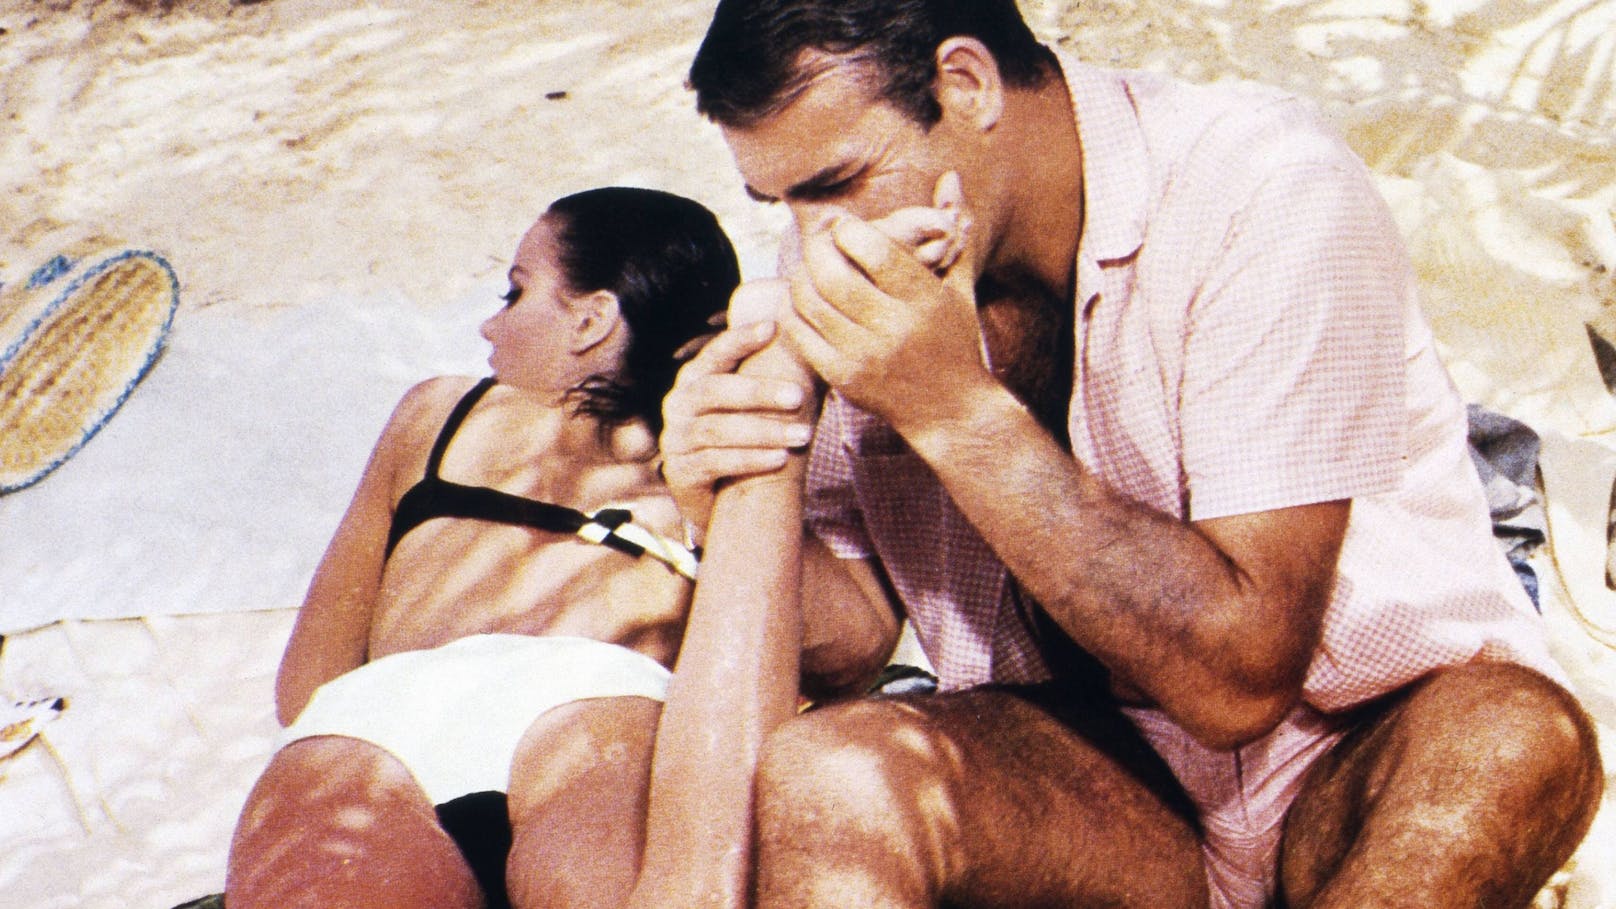 Sean Connery als James Bond in "Feuerball" mit Claudine Auger als "Domino".